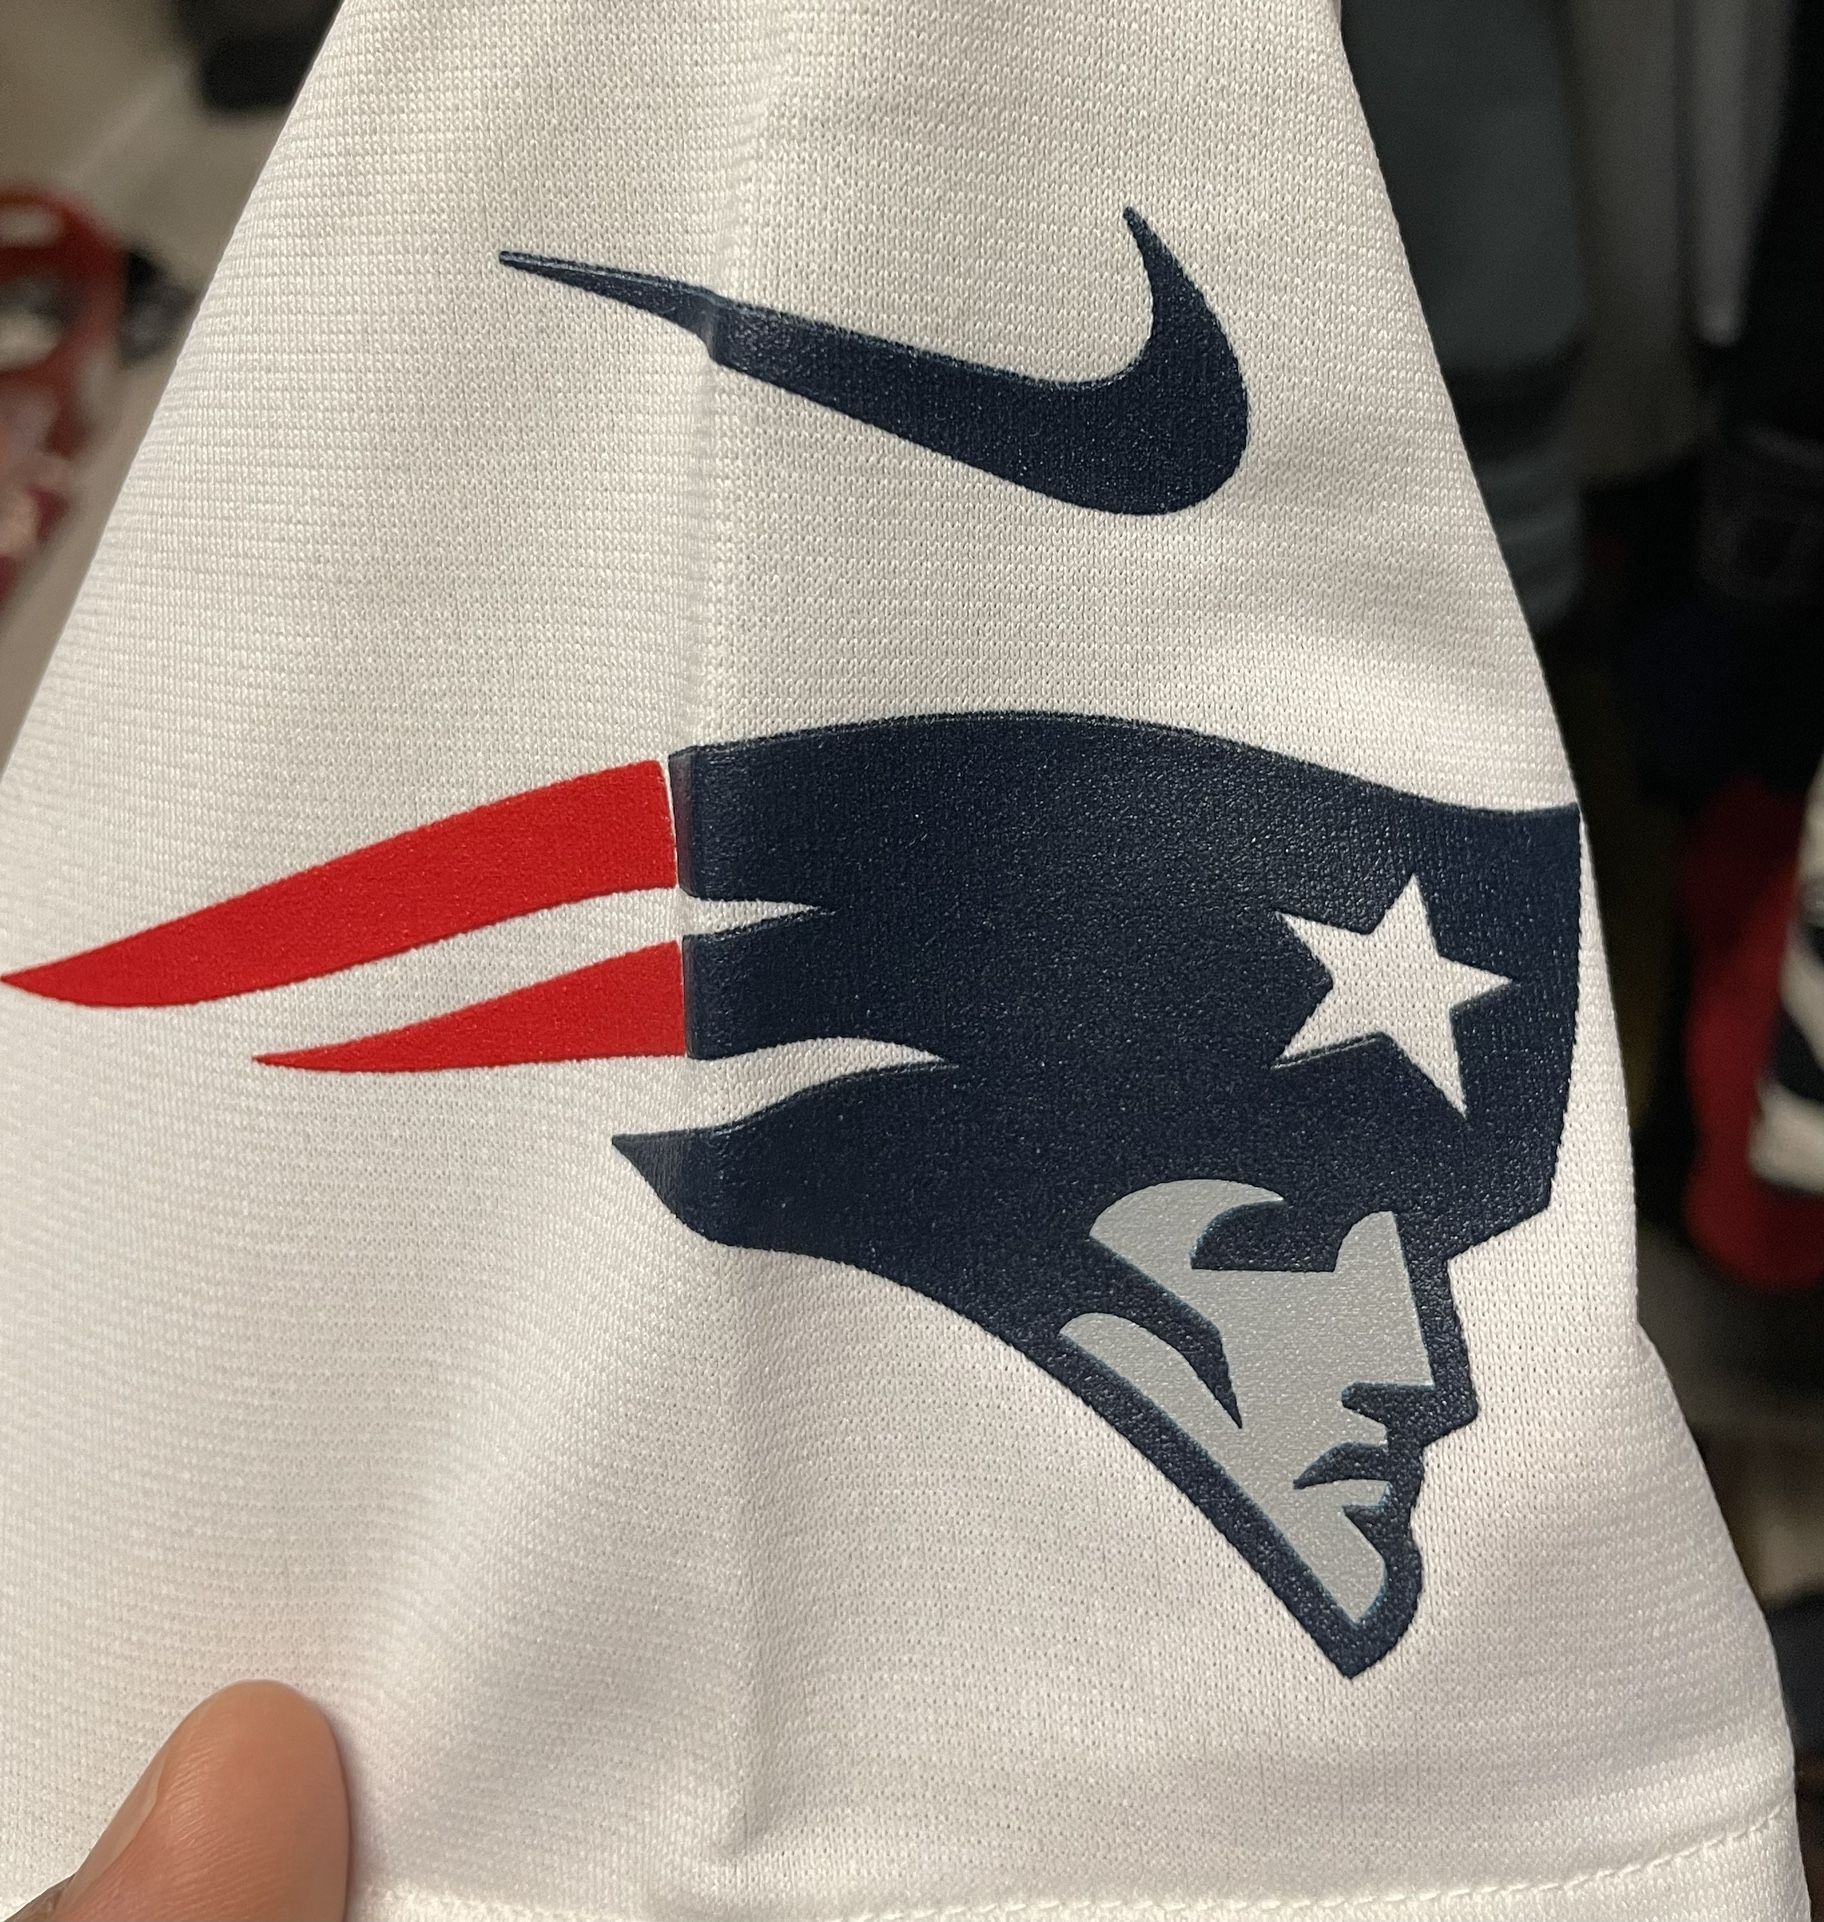 Cam Newton New England Patriots Nike Women's Game Jersey - White